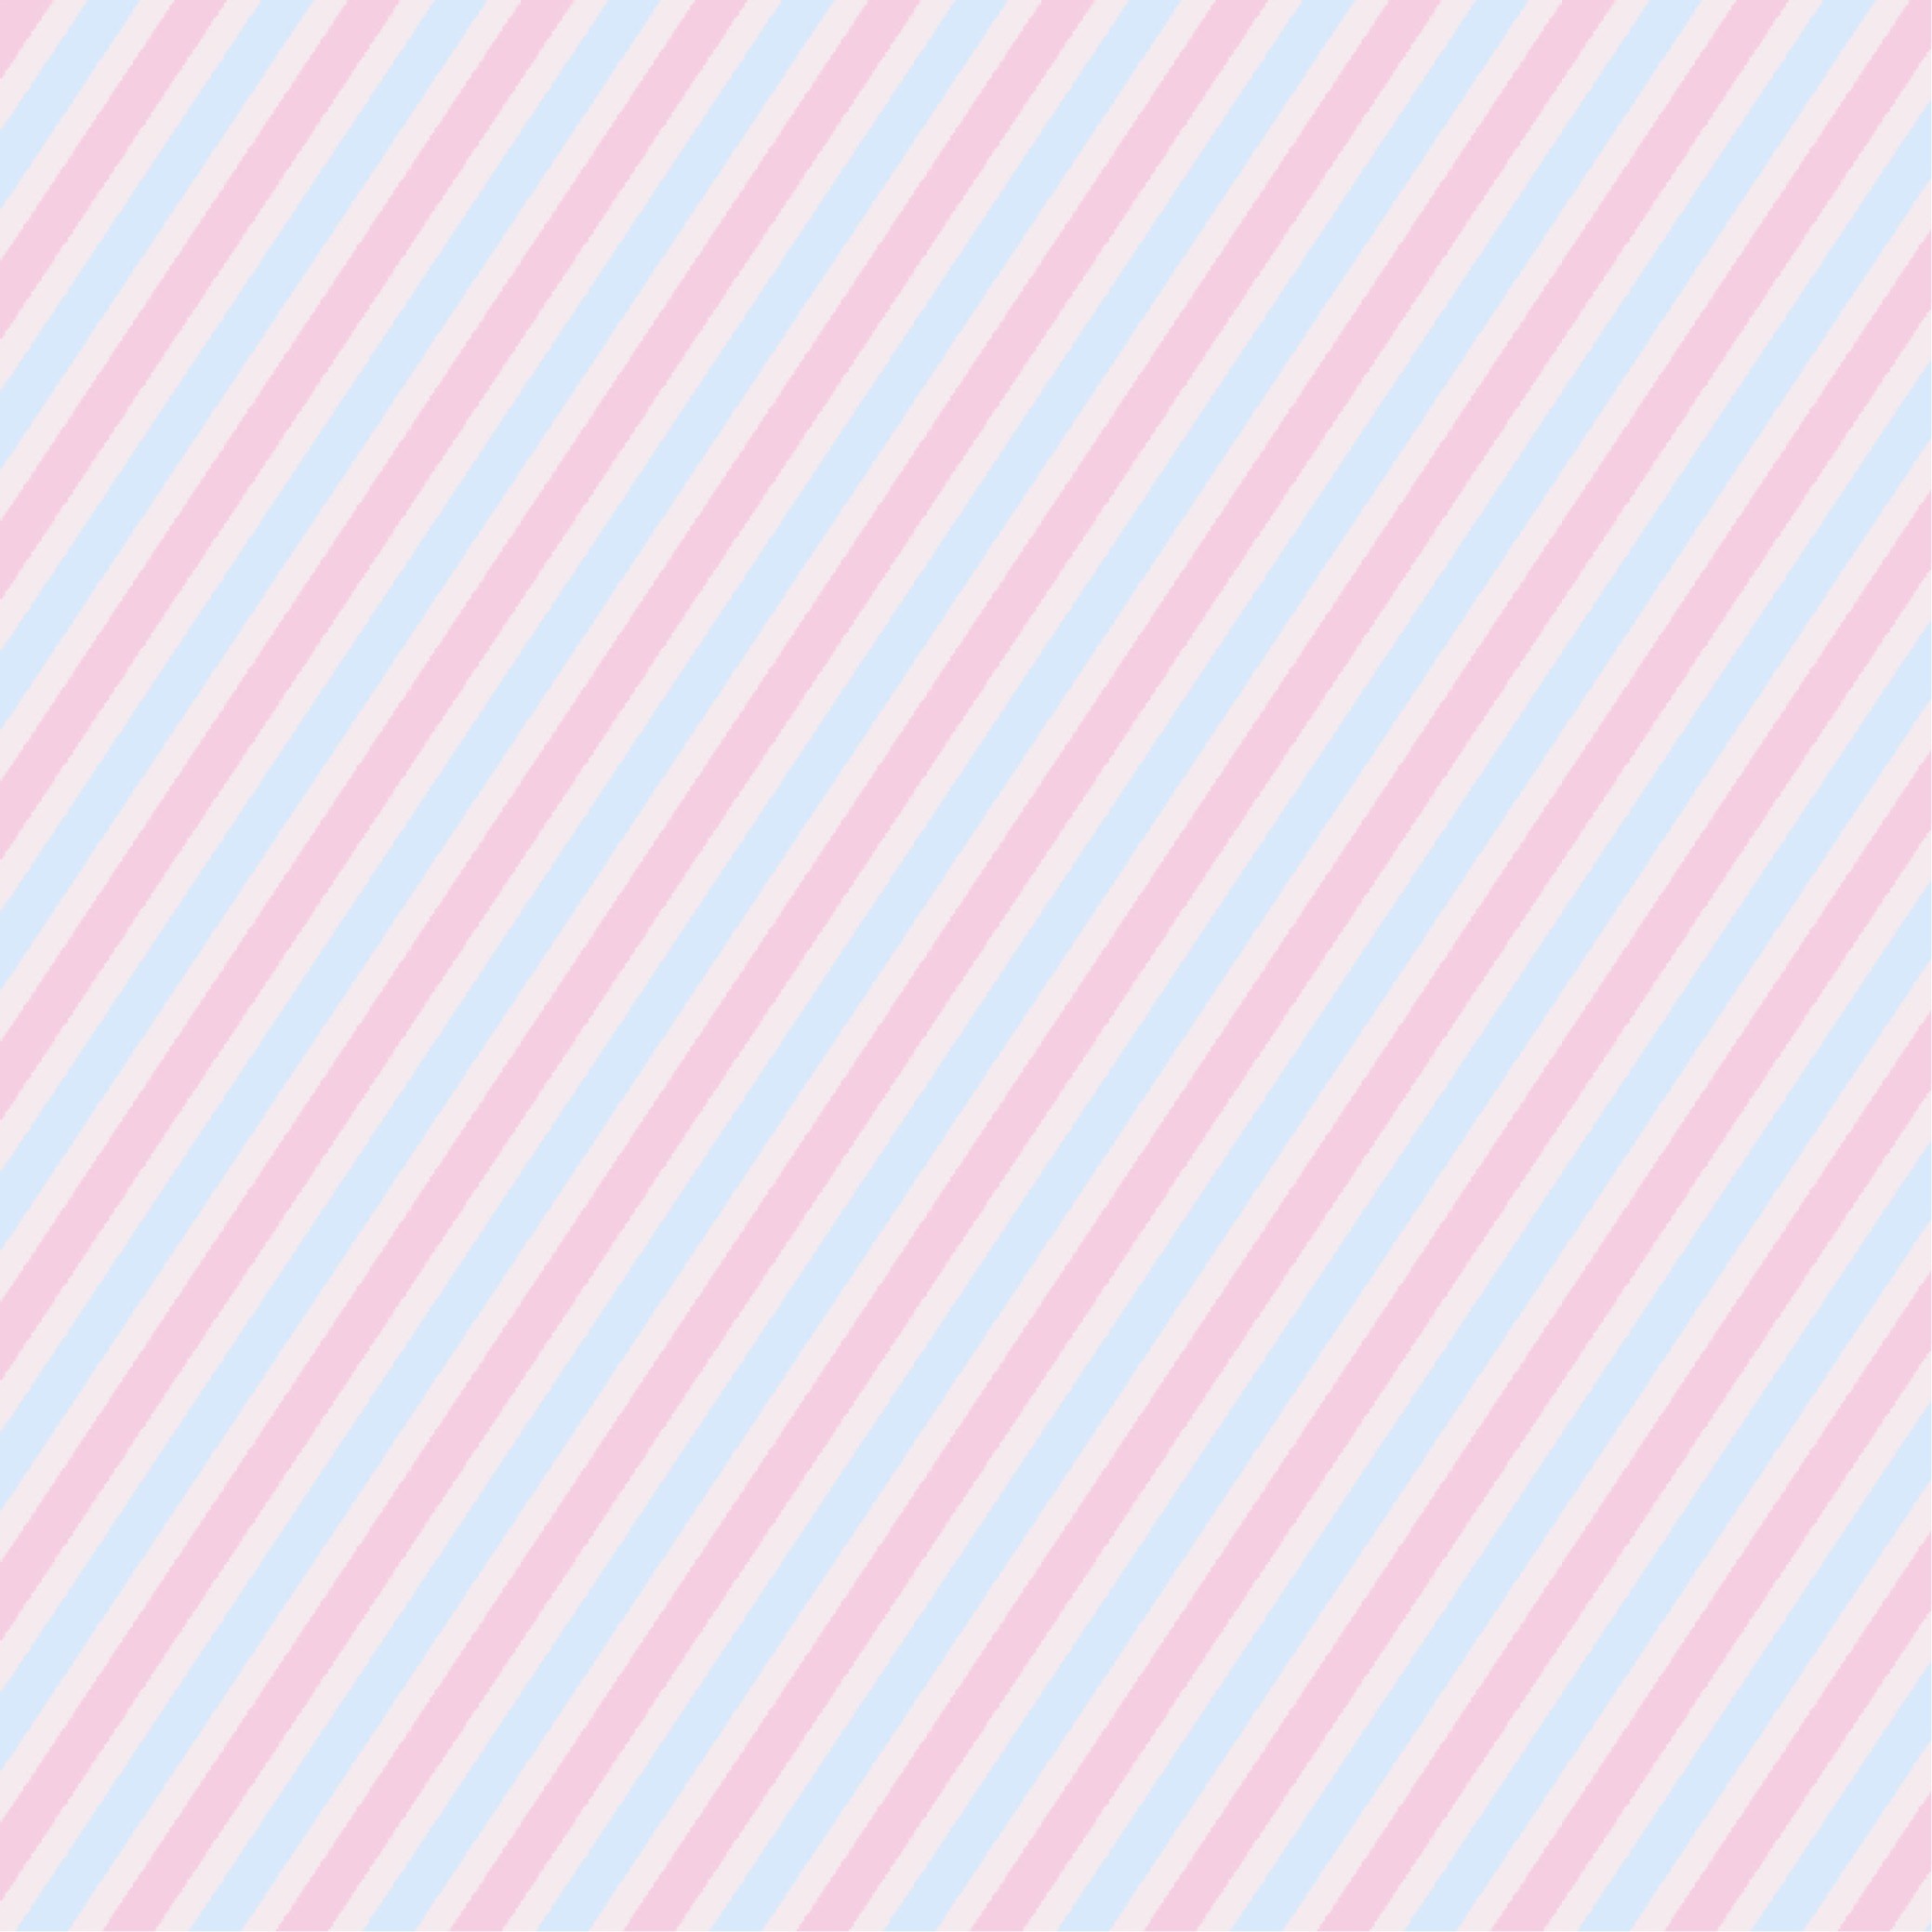 2078x2078 Pink & Blue Striped Wallpaper